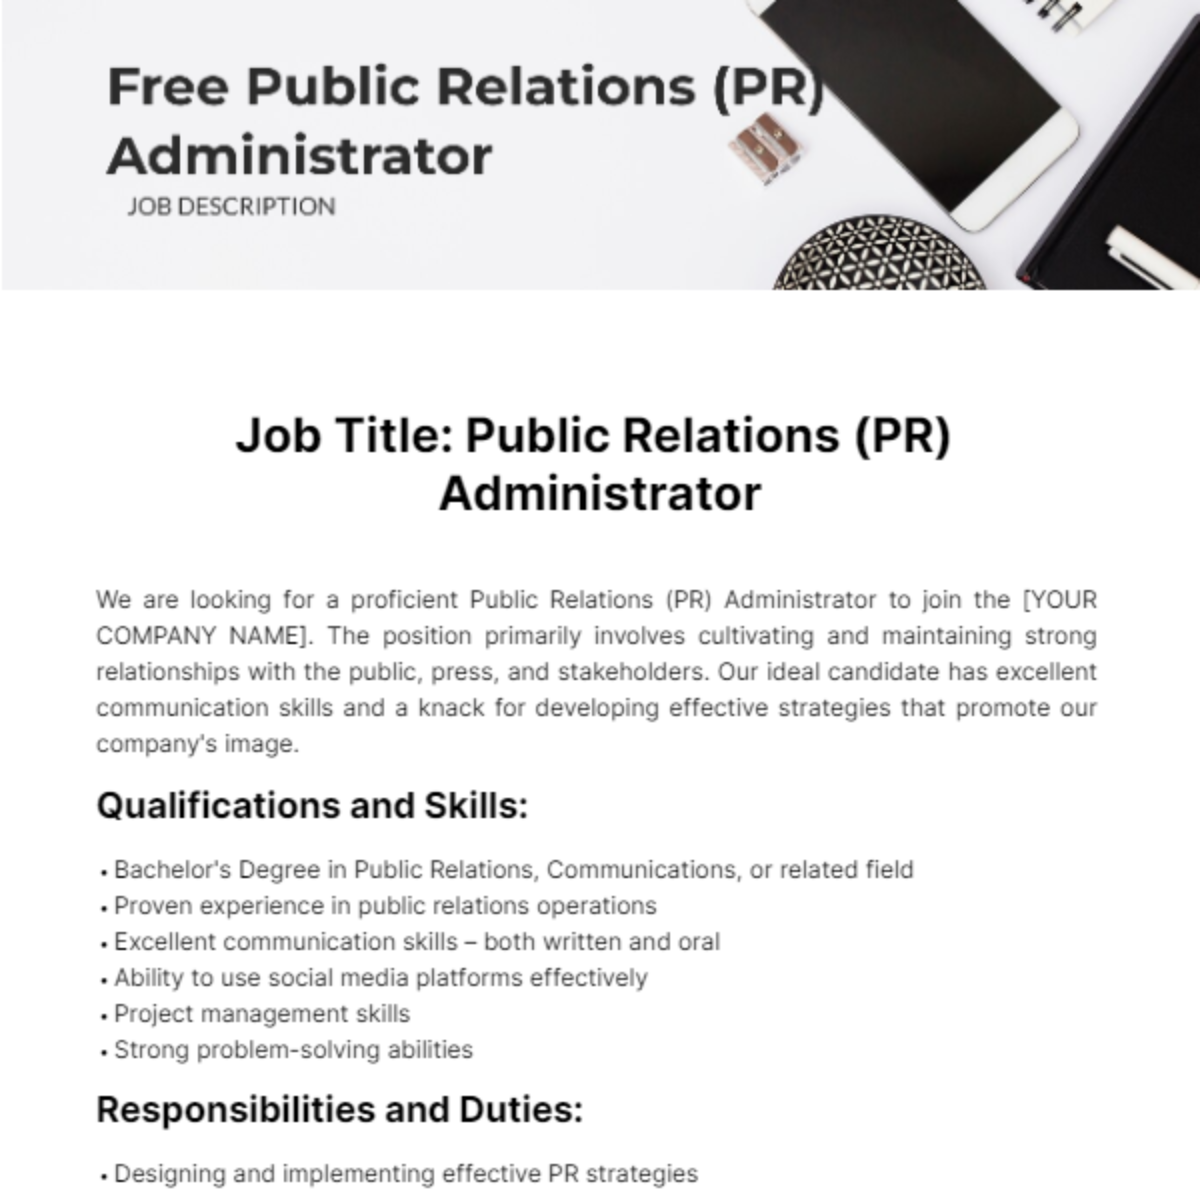 Public Relations (PR) Administrator Job Description Template